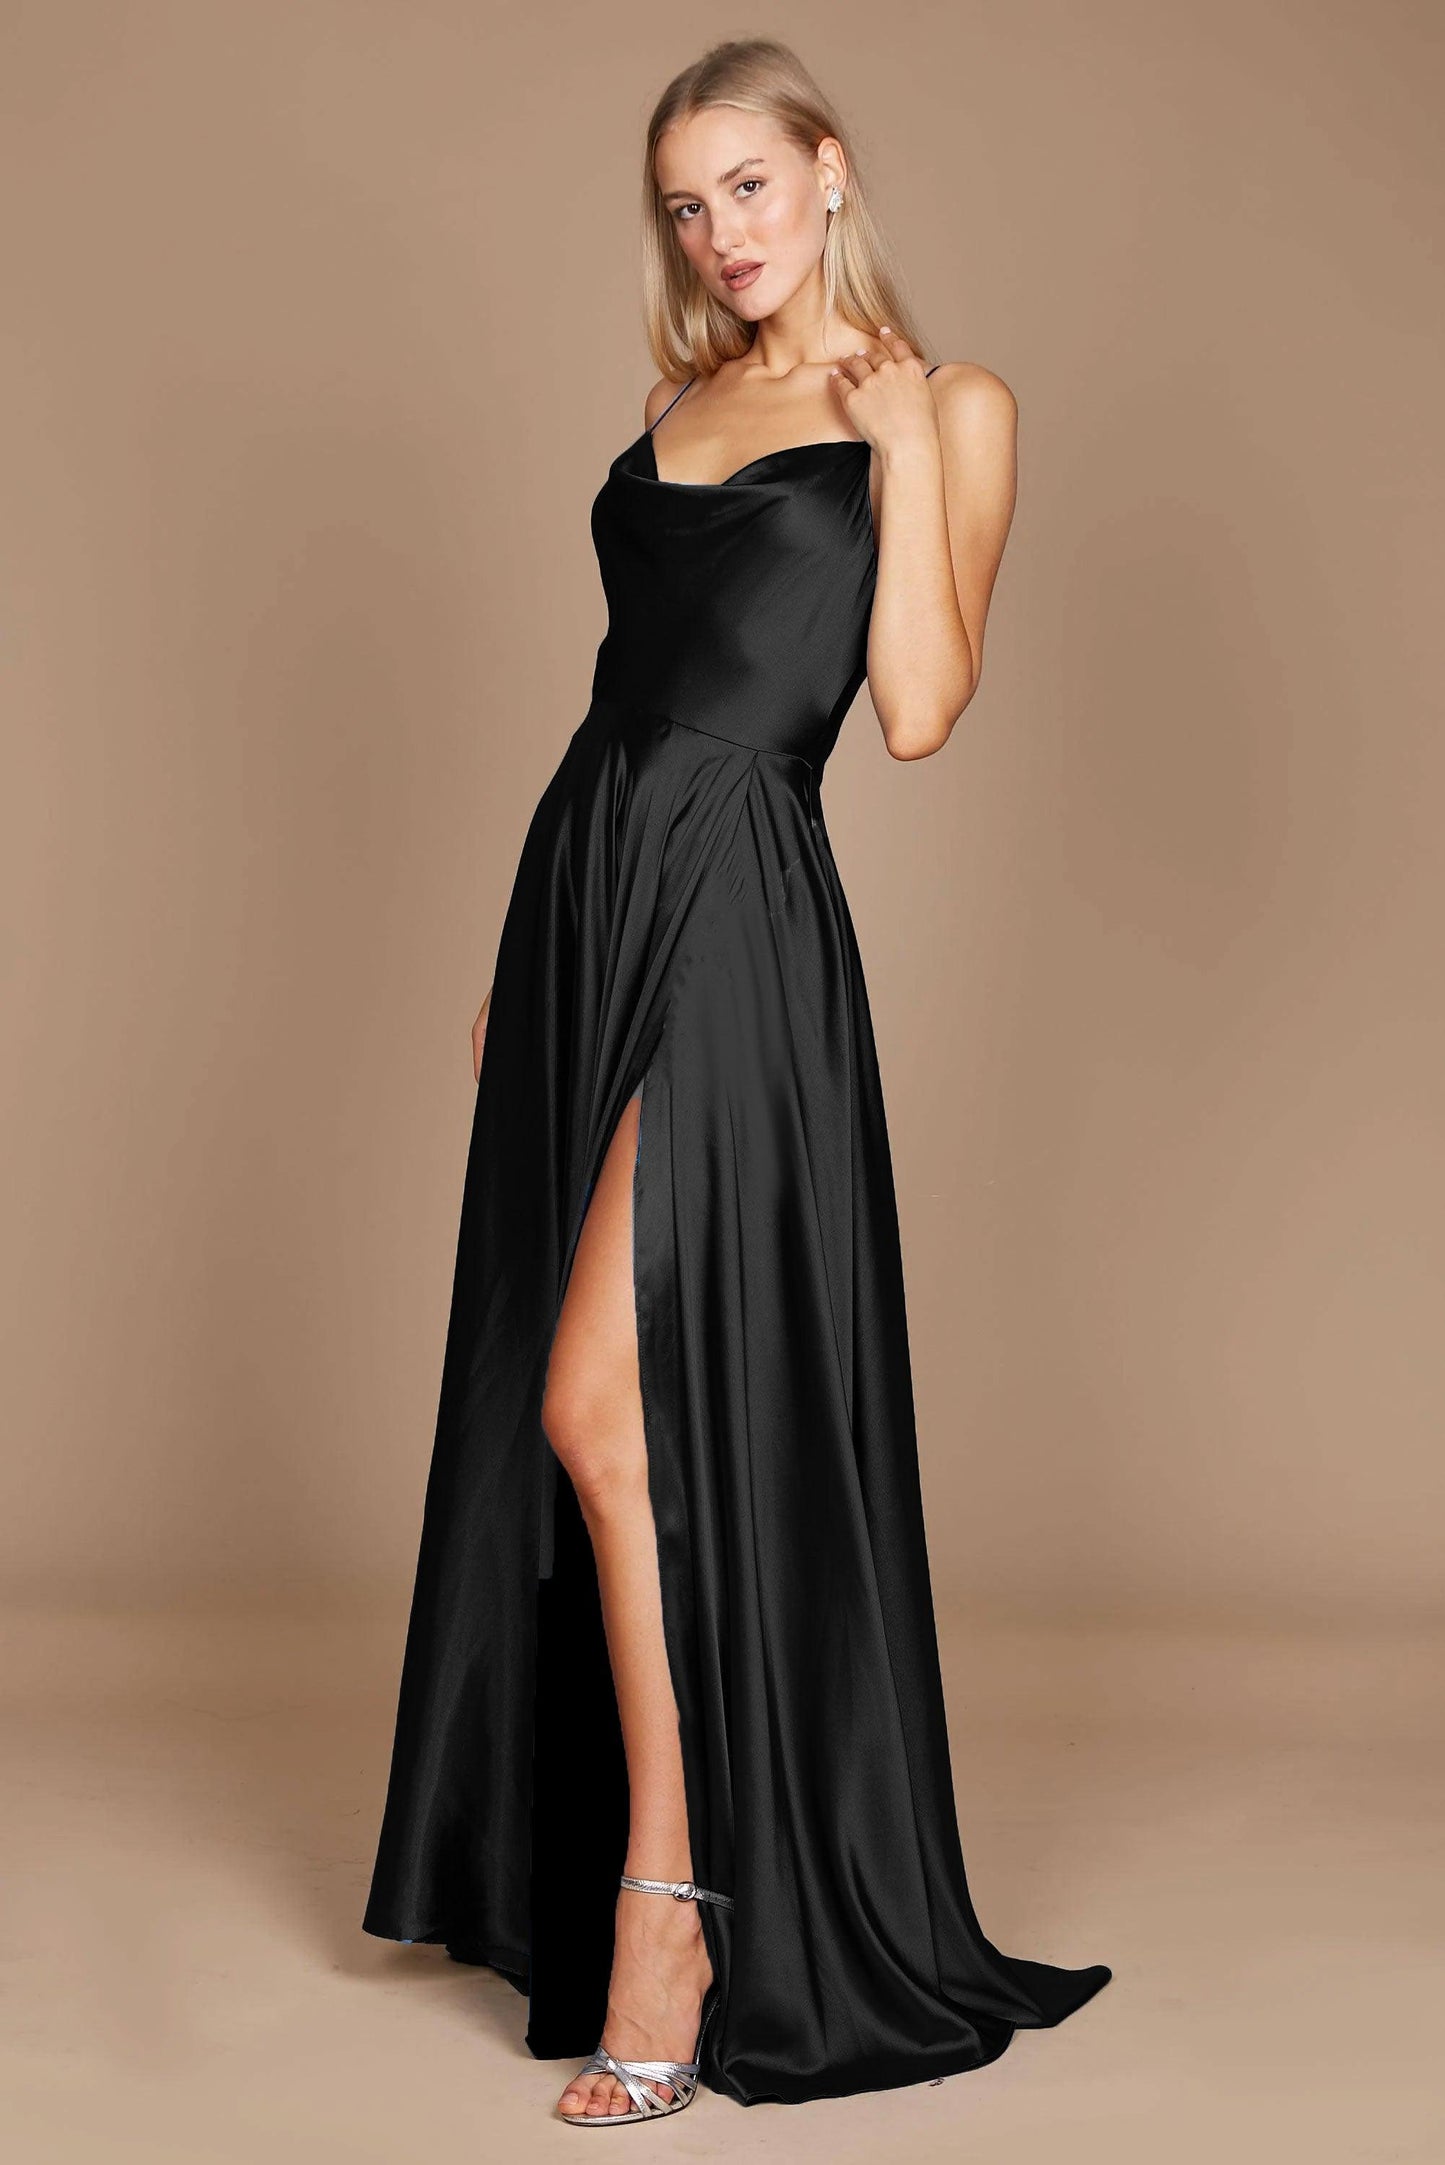 Prom Dresses Formal Cowl Neck Spaghetti Strap Party Dress Black